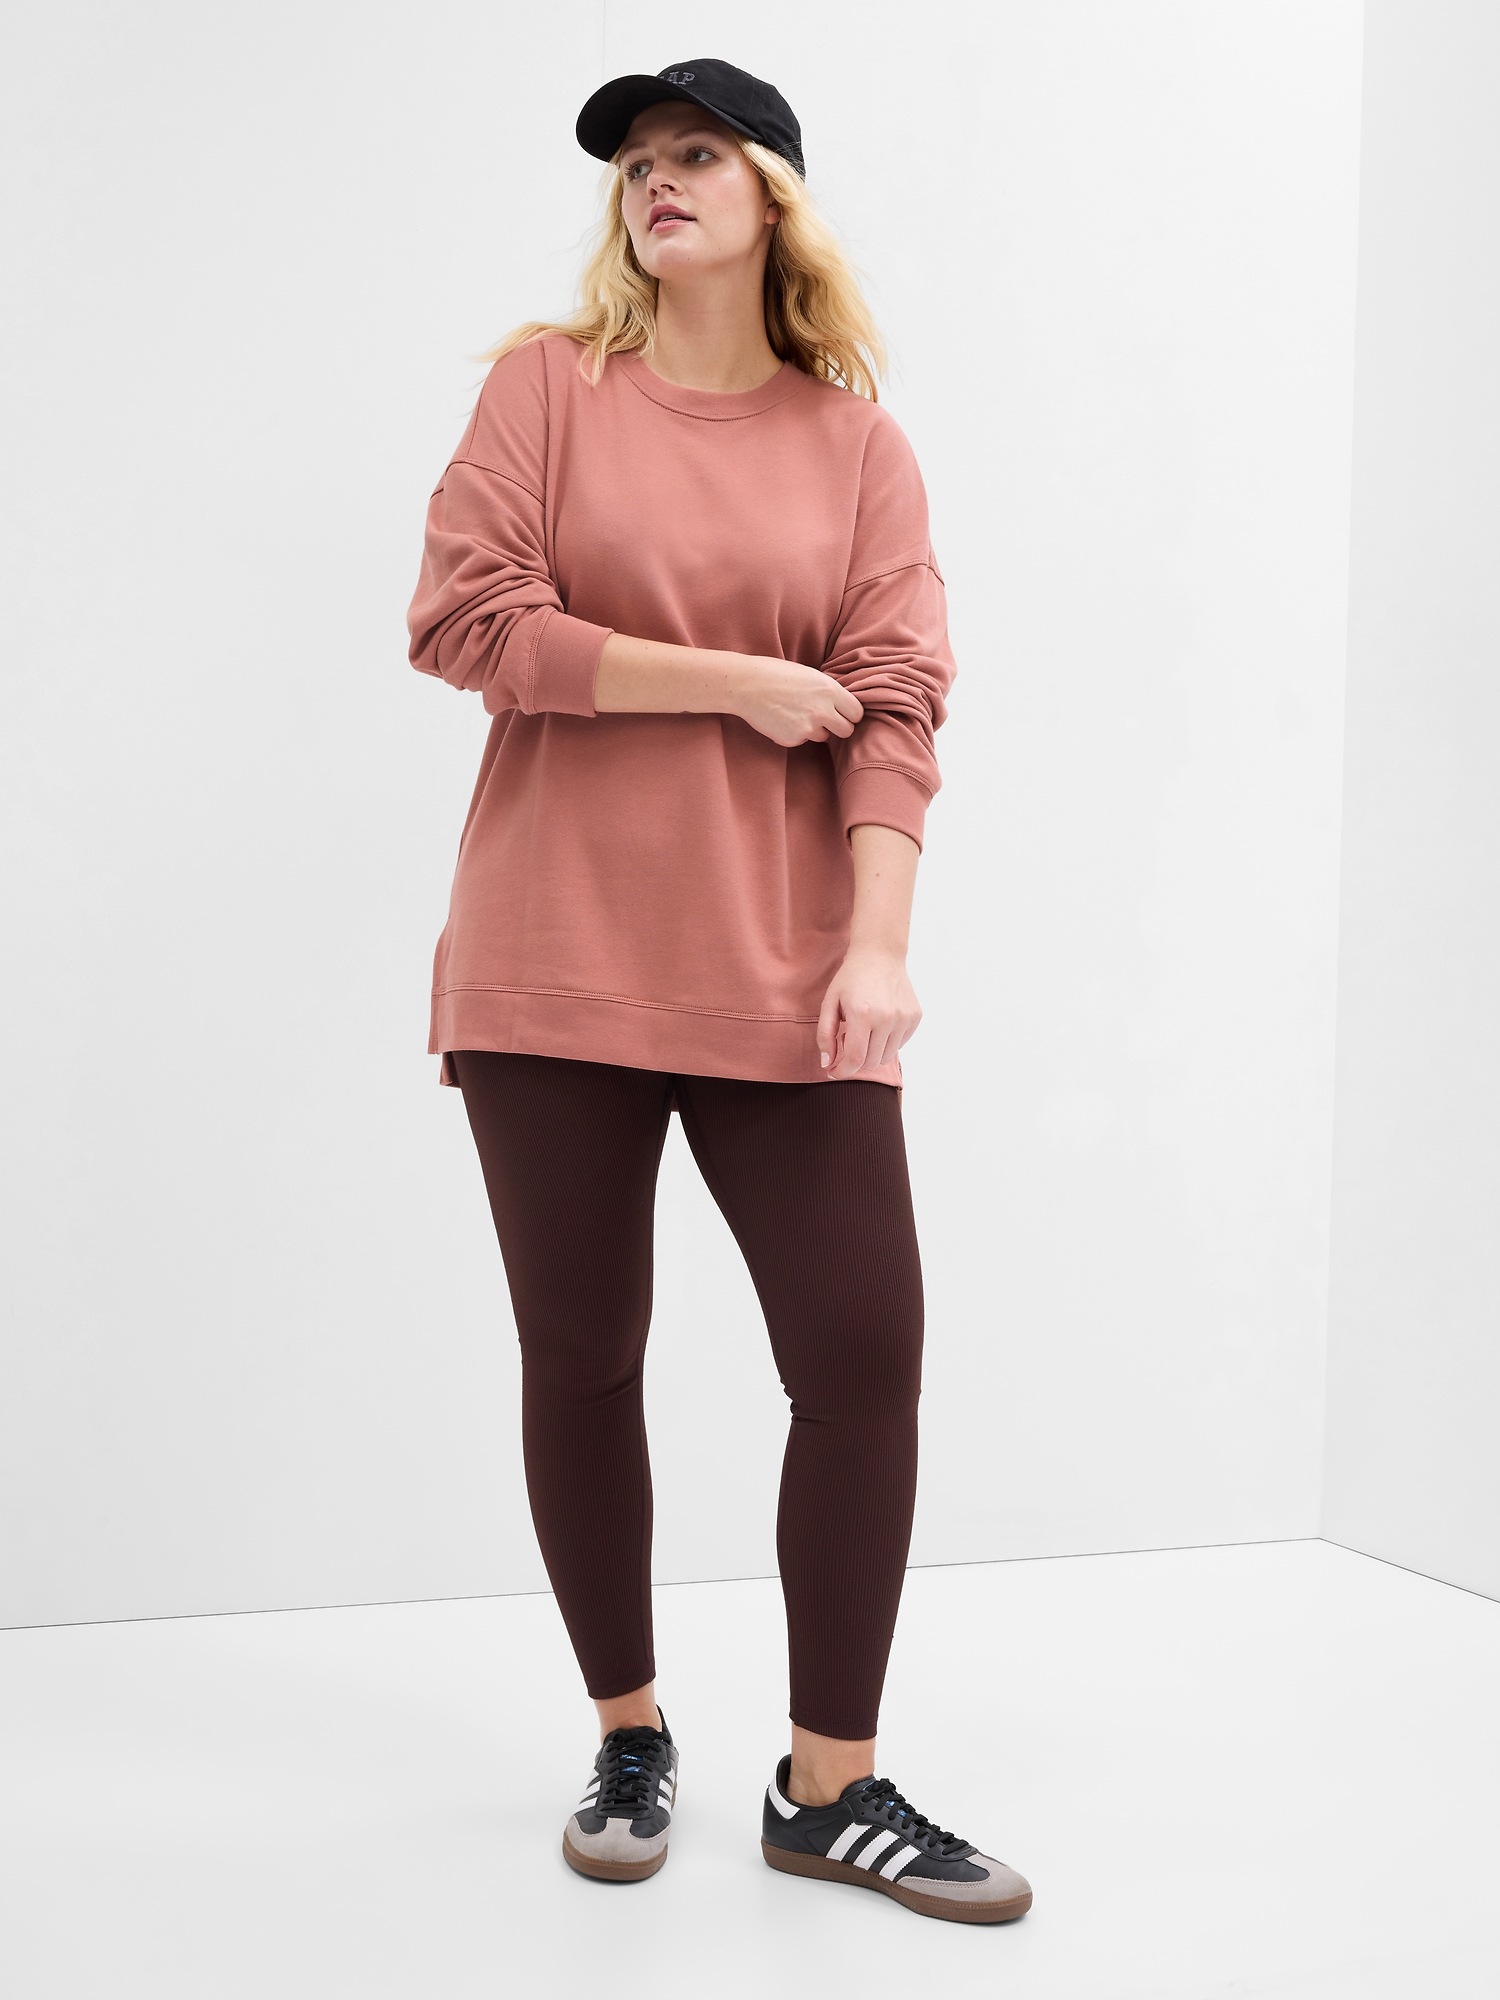 Geifa Crewneck Sweatshirts for Women Oversized Sweaters Long Sleeve Shirts  Tunic Tops for Leggings